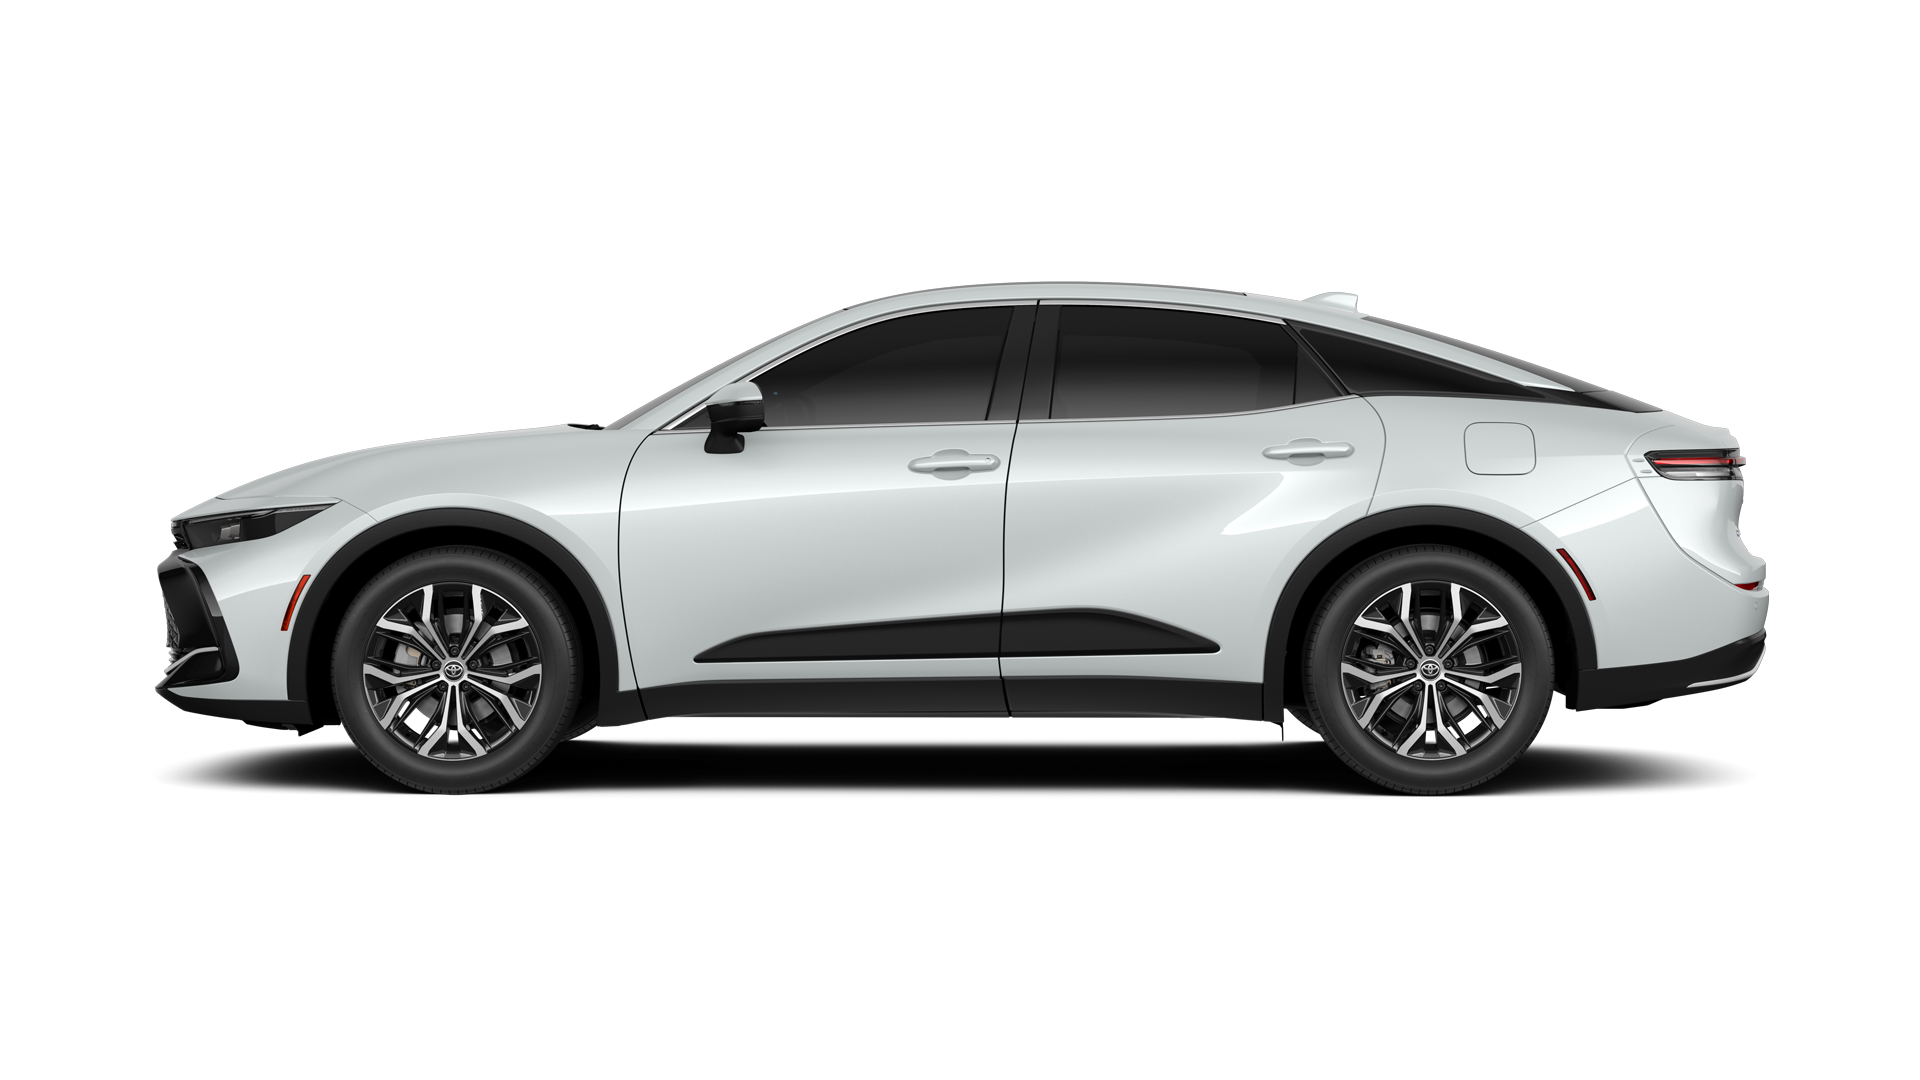 2025 Toyota Crown in Oxygen White.